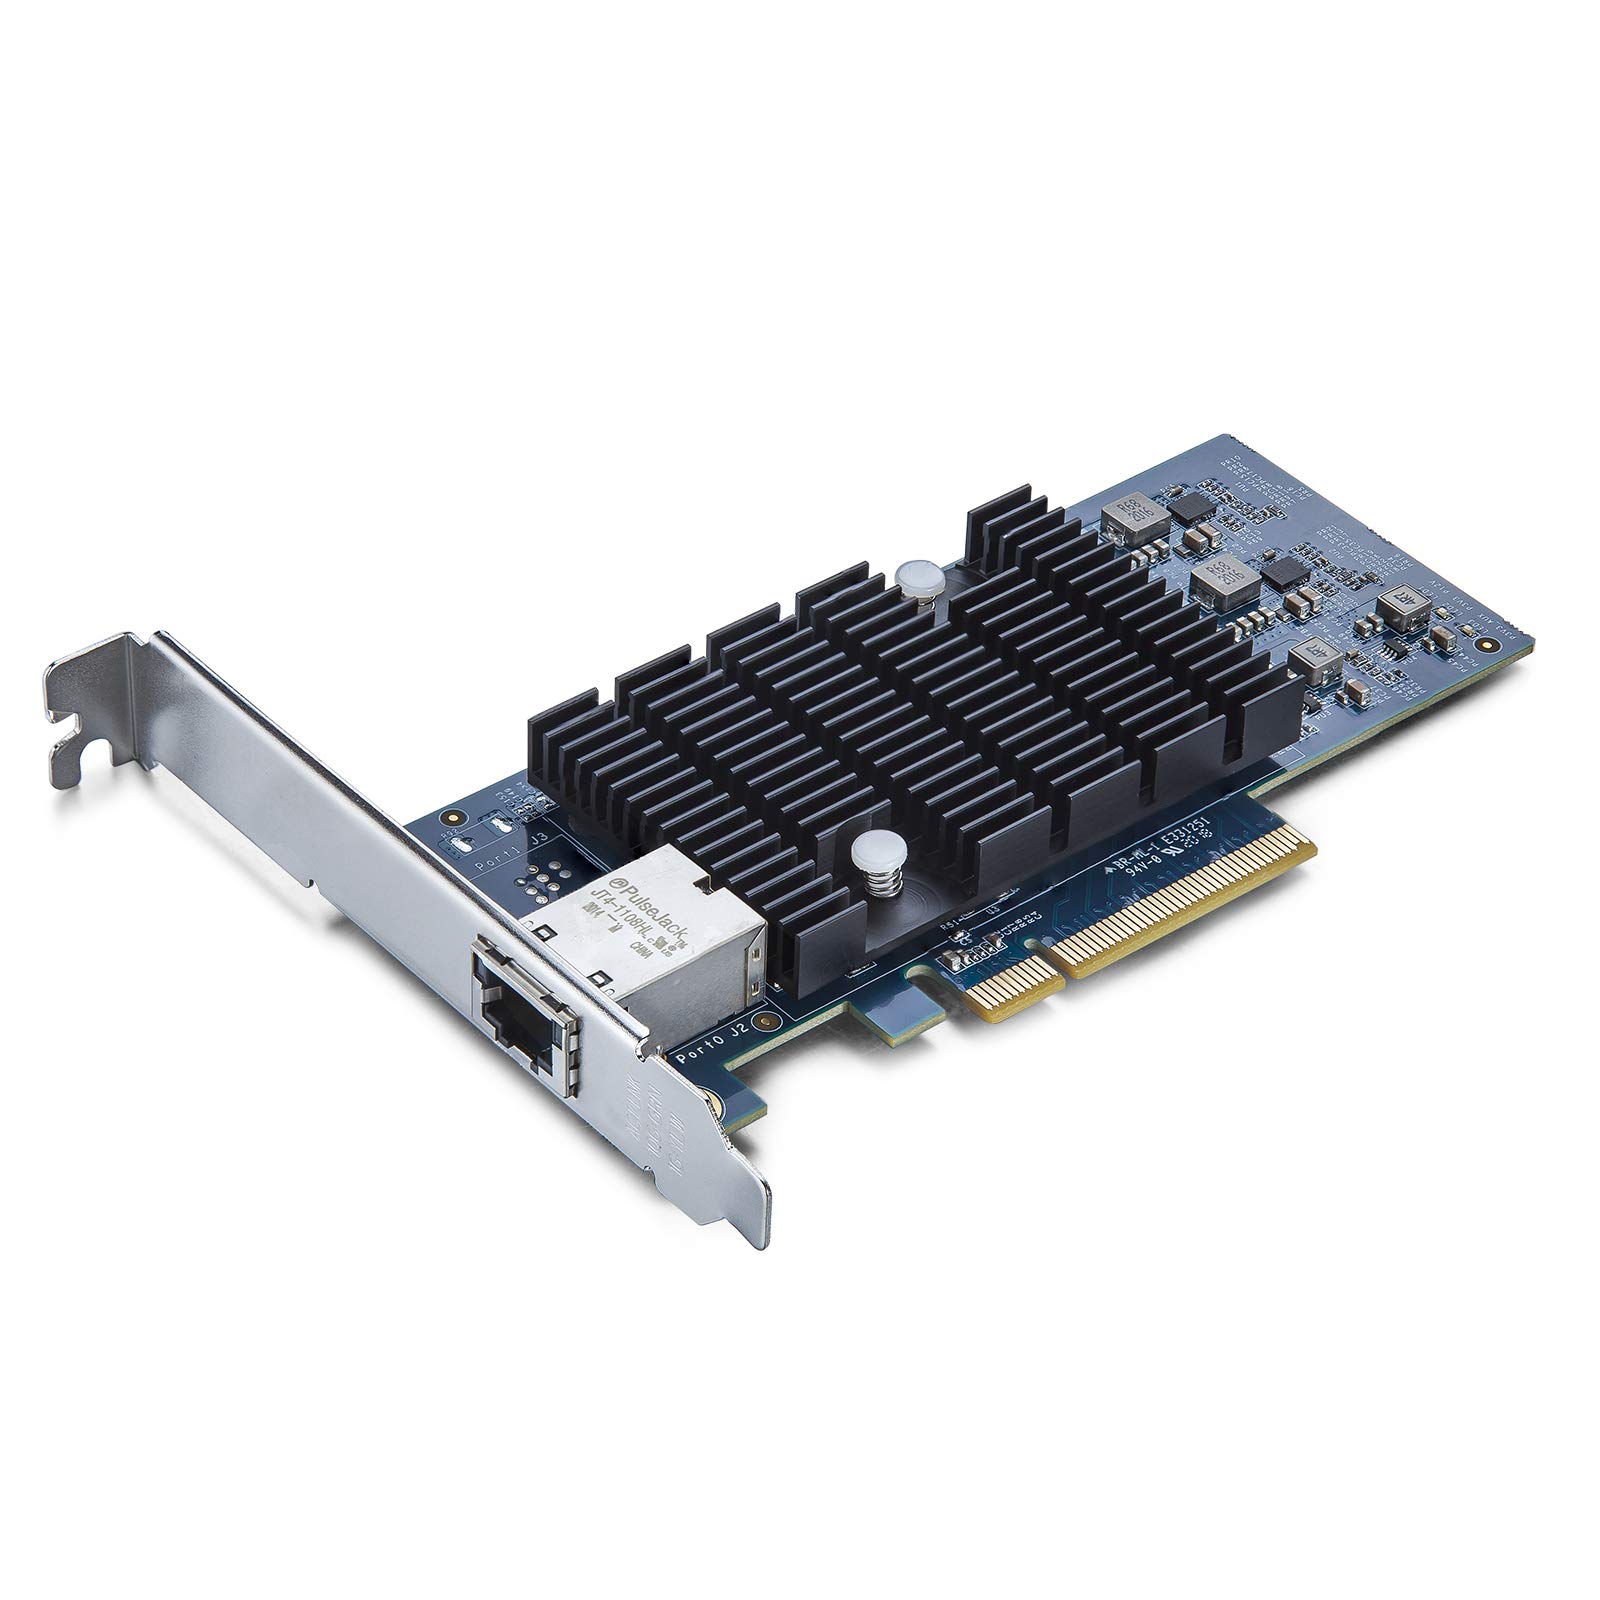 10Gb Nic para Windows Server 10 Dual RJ45 Puertos 3-Year Warranty Linux Win8 Intel X540 Chip 10Gtek® Tarjeta de Red 10GbE PCIE X540-T2 10Gbit PCI Express Ethernet LAN Adapter 